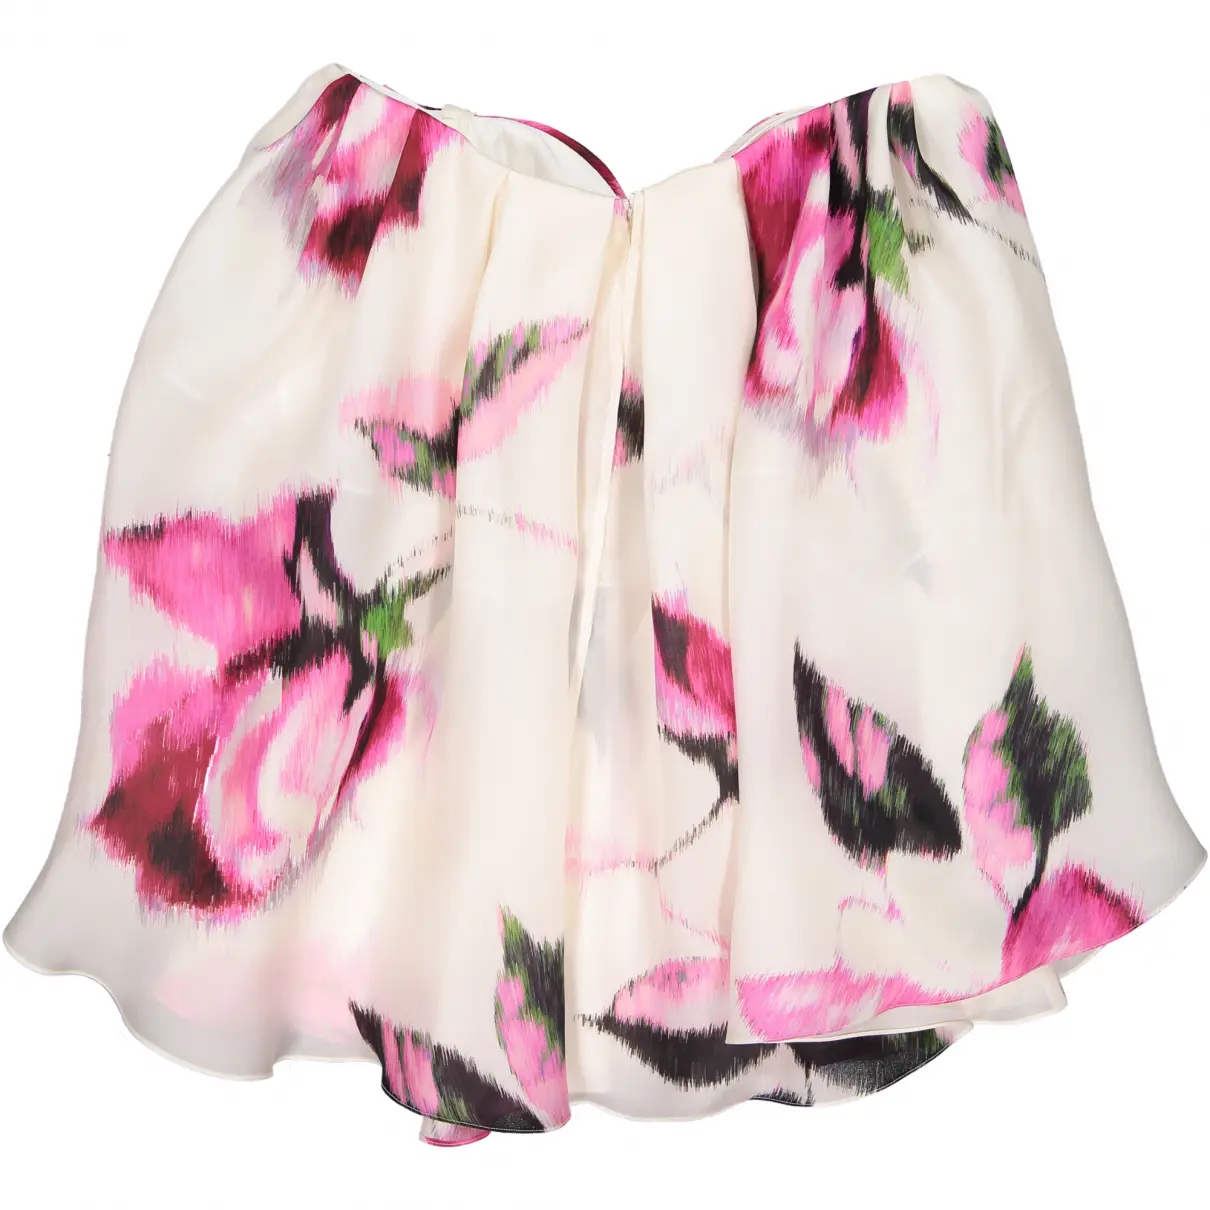 Buy Carolina Herrera Silk mini dress online